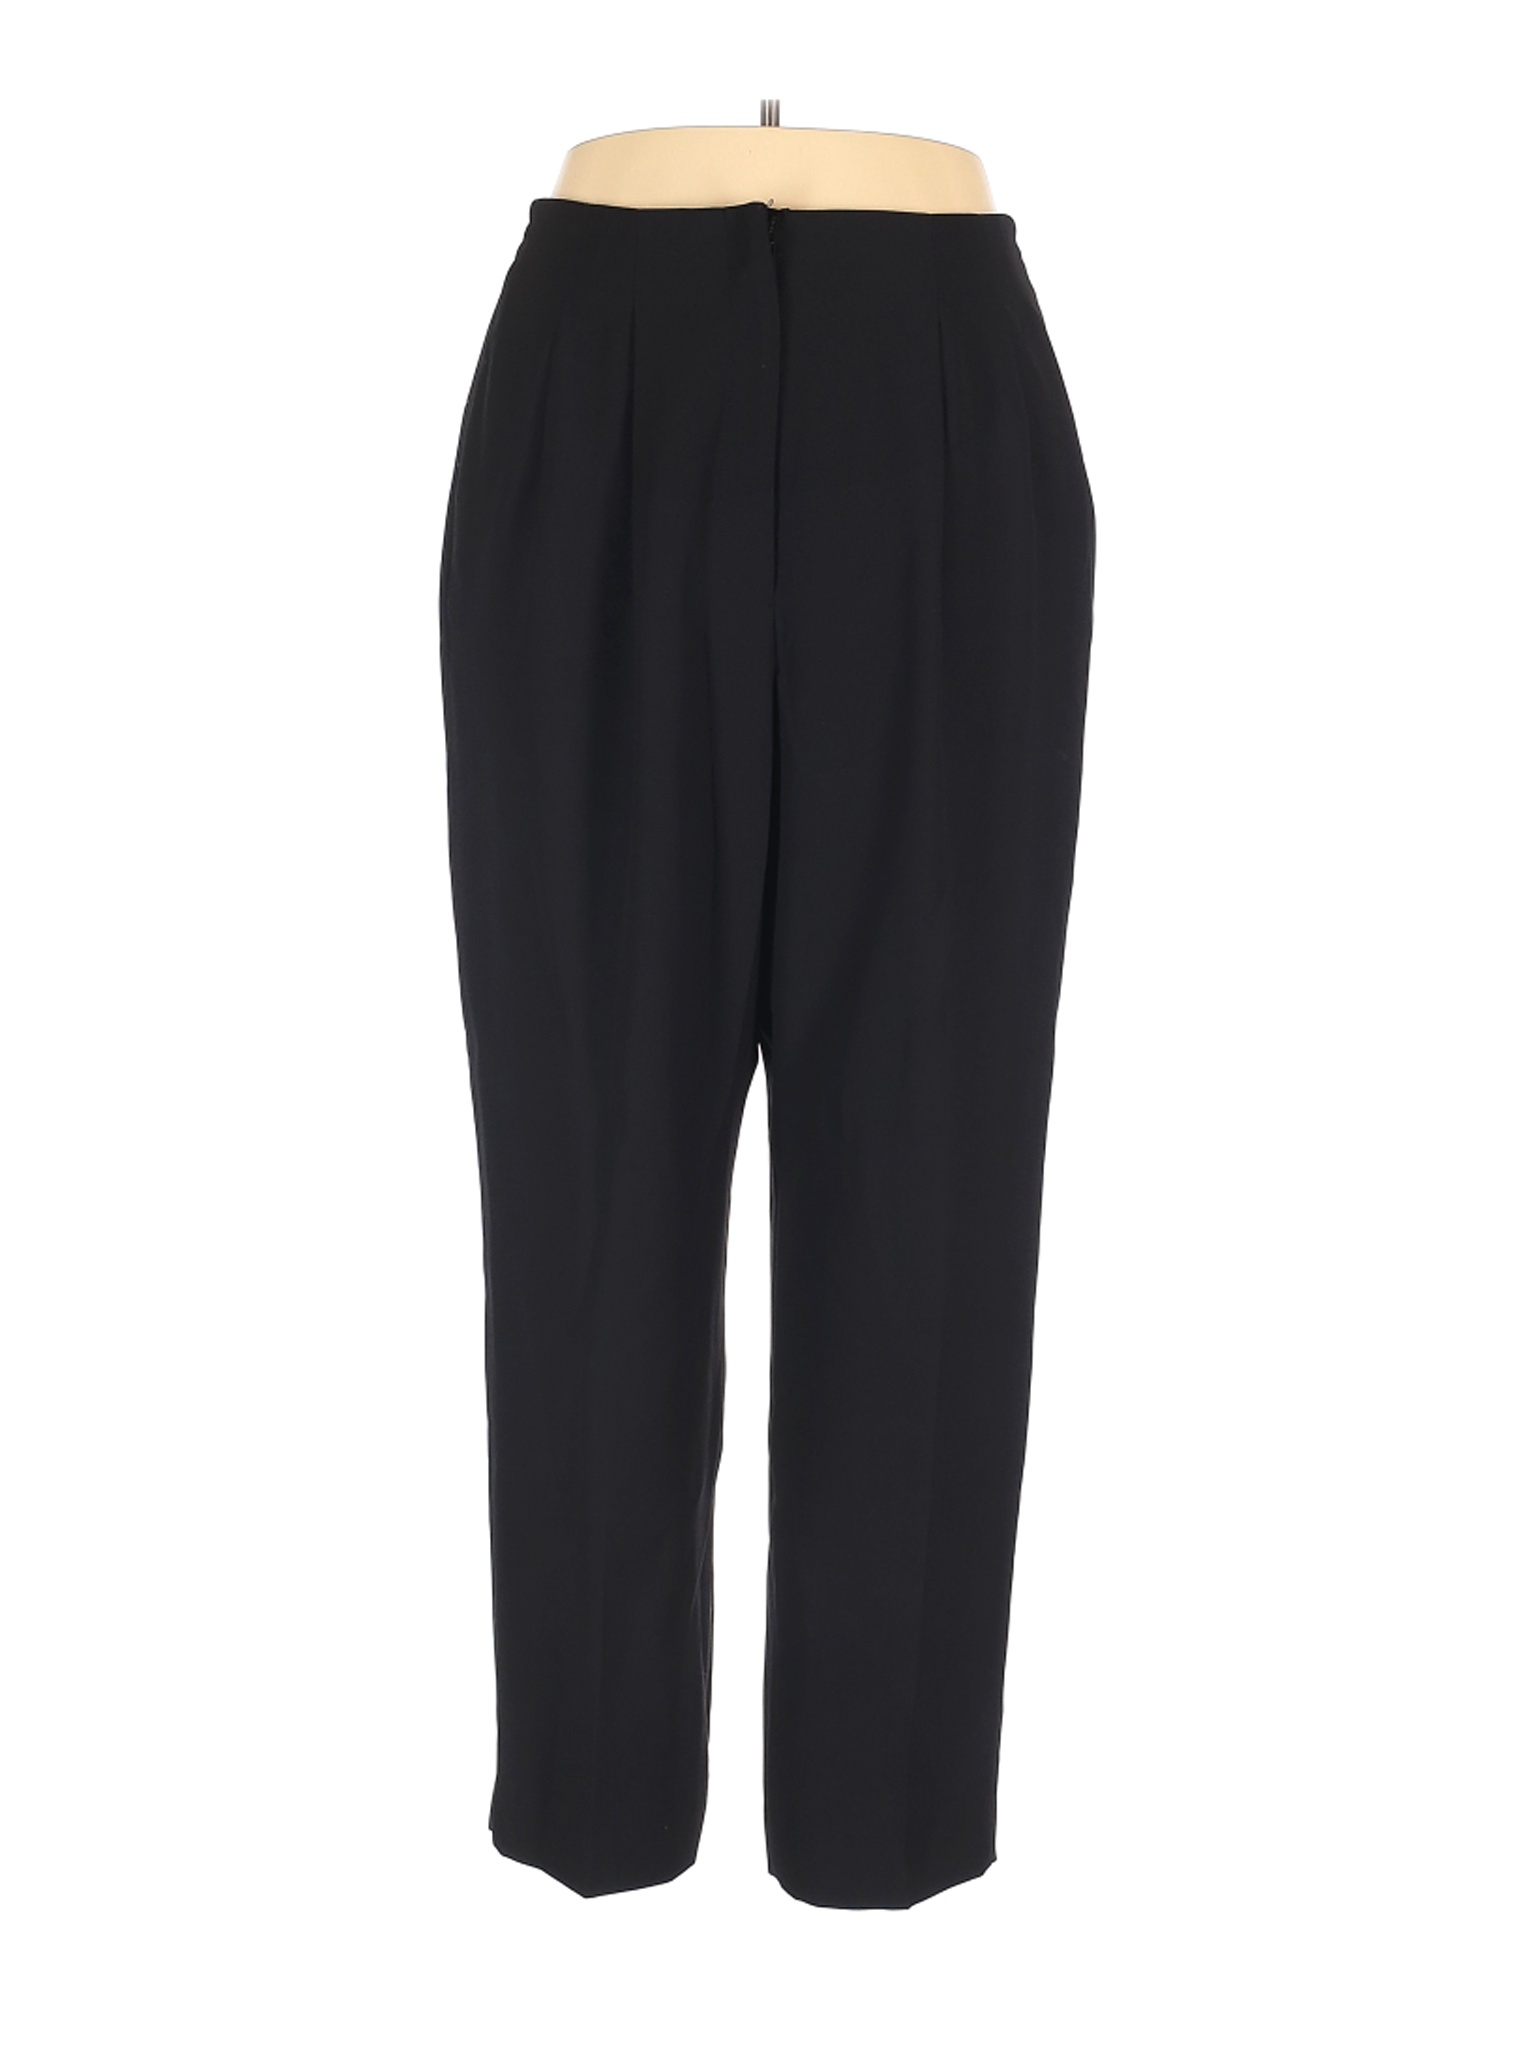 Amanda Smith Women Black Dress Pants 16 | eBay